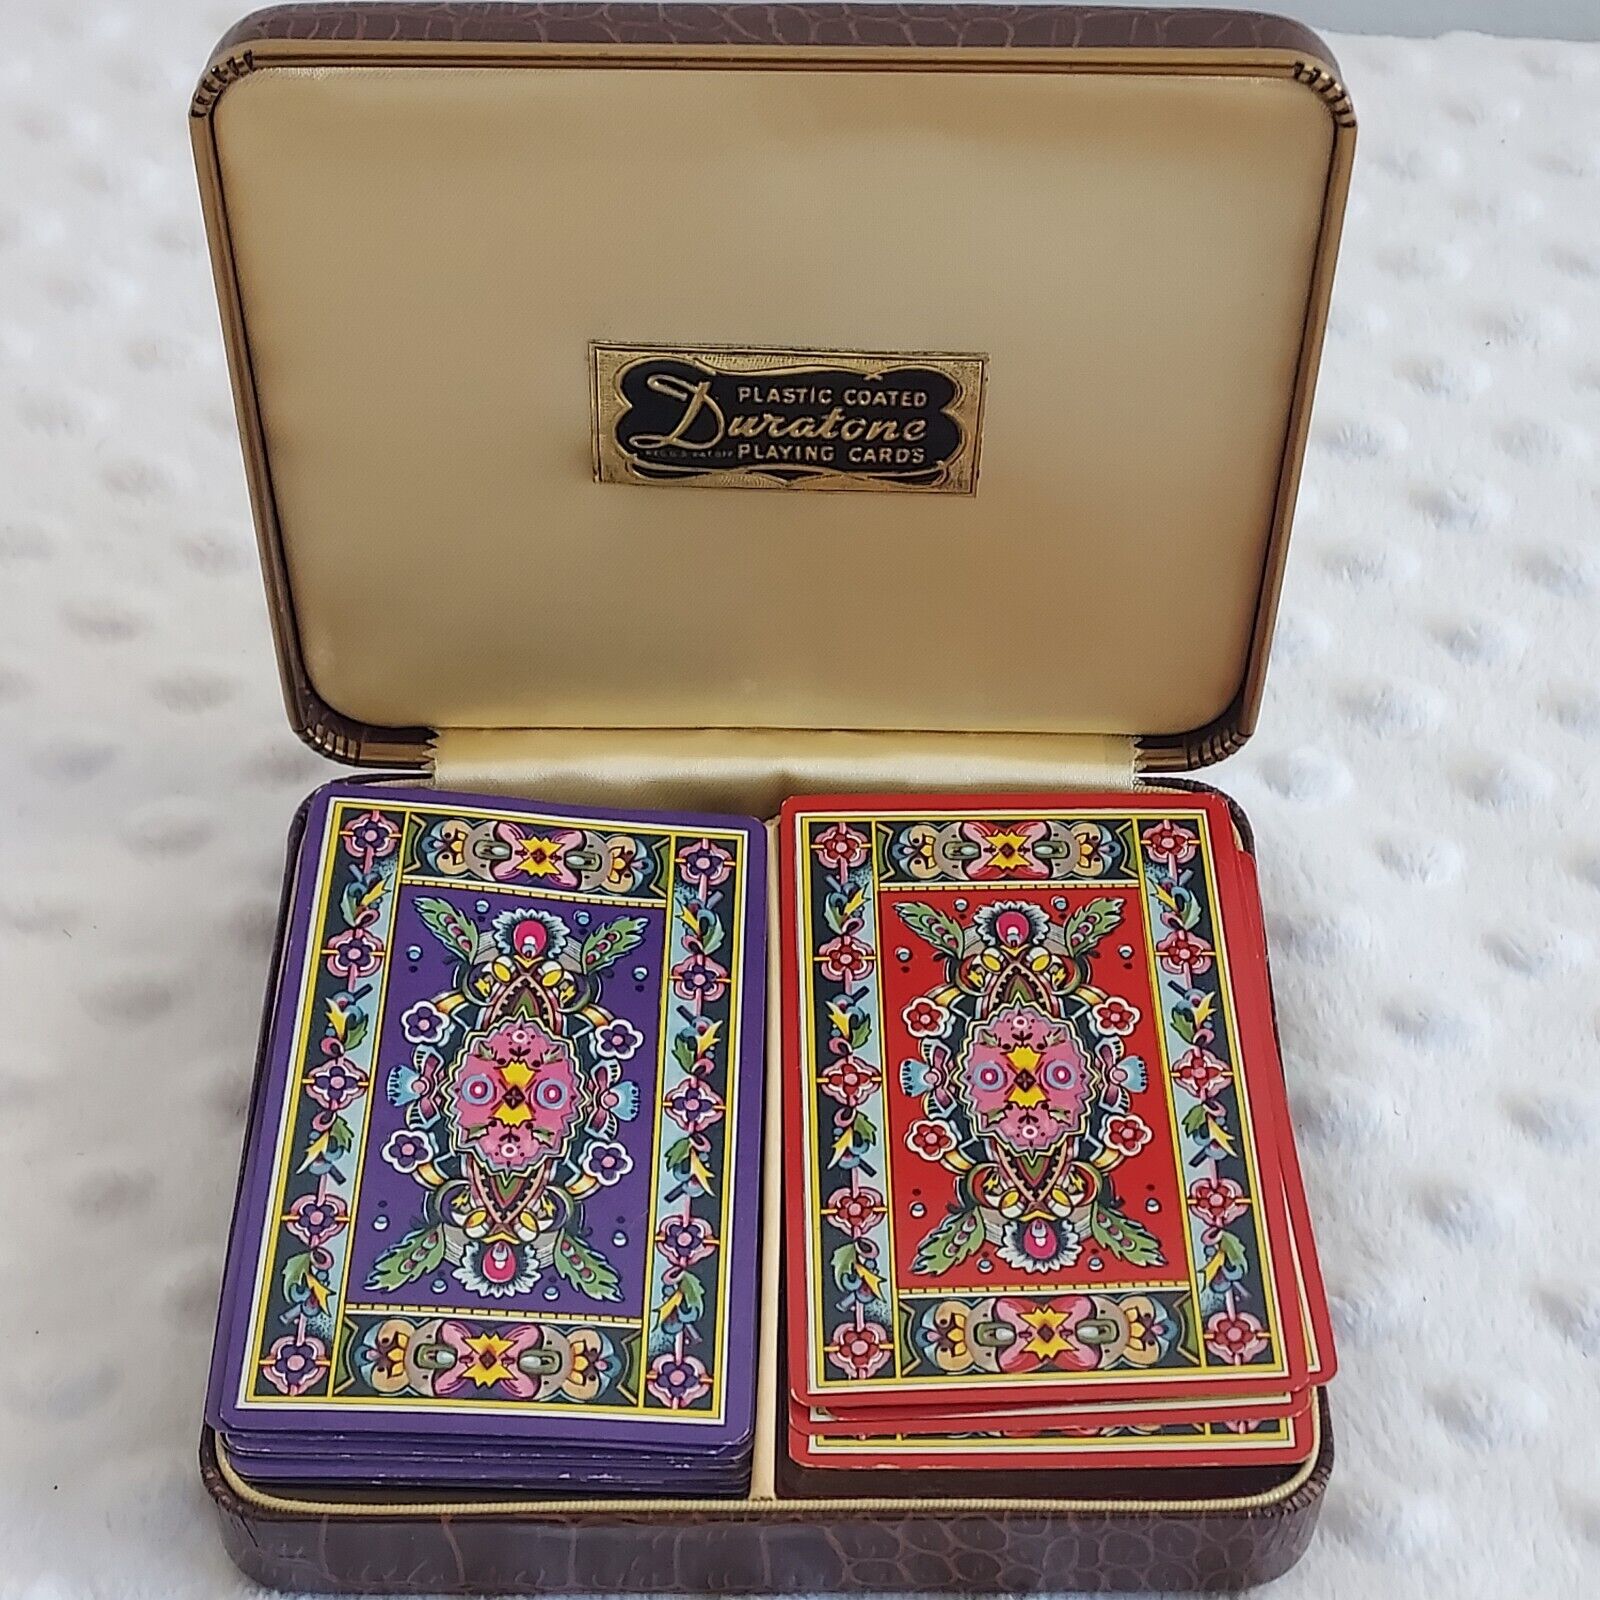 Vintage Duratone Plastic Coated Playing Cards Arrco 2 Deck Set Paisley Floral 